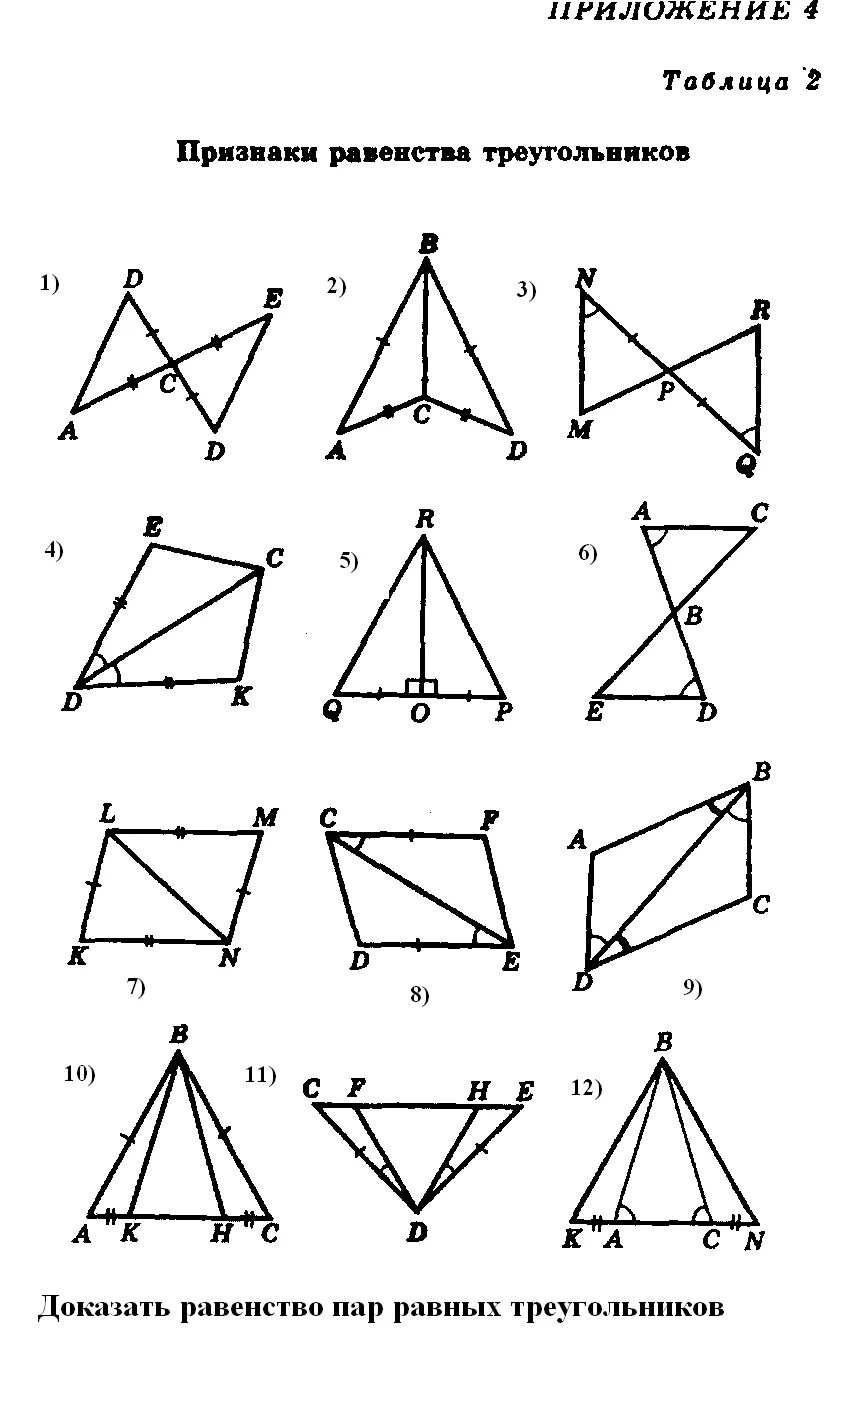 Первое равенство треугольников задачи. Задачи на признаки равенства треугольников 7 класс. 2 Признак равенства треугольников задачи. Признаки равенства треугольников задачи. Задачи на равенство треугольников 7.